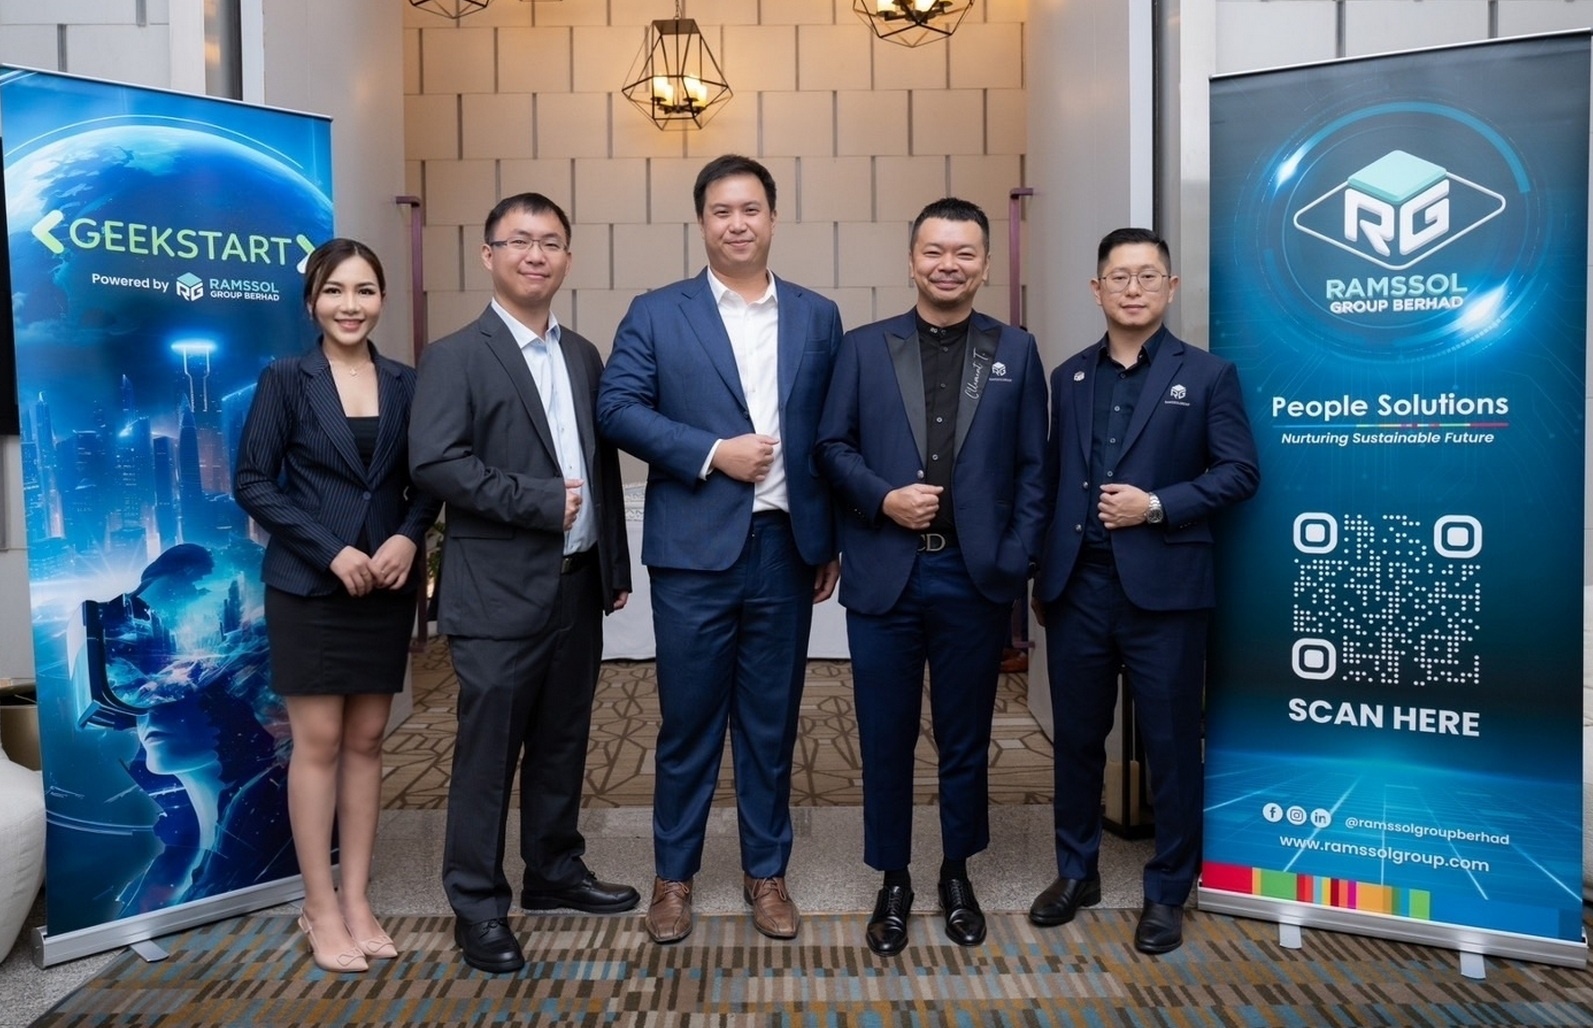 “Ramssol Group Berhad” ทุ่มงบผนึกกำลัง “Geekstart” เพื่อยกระดับการเป็นผู้นำด้านดิจิทัล พร้อมขยายสู่ Generative AI  ในเอเชียตะวันออกเฉียงใต้